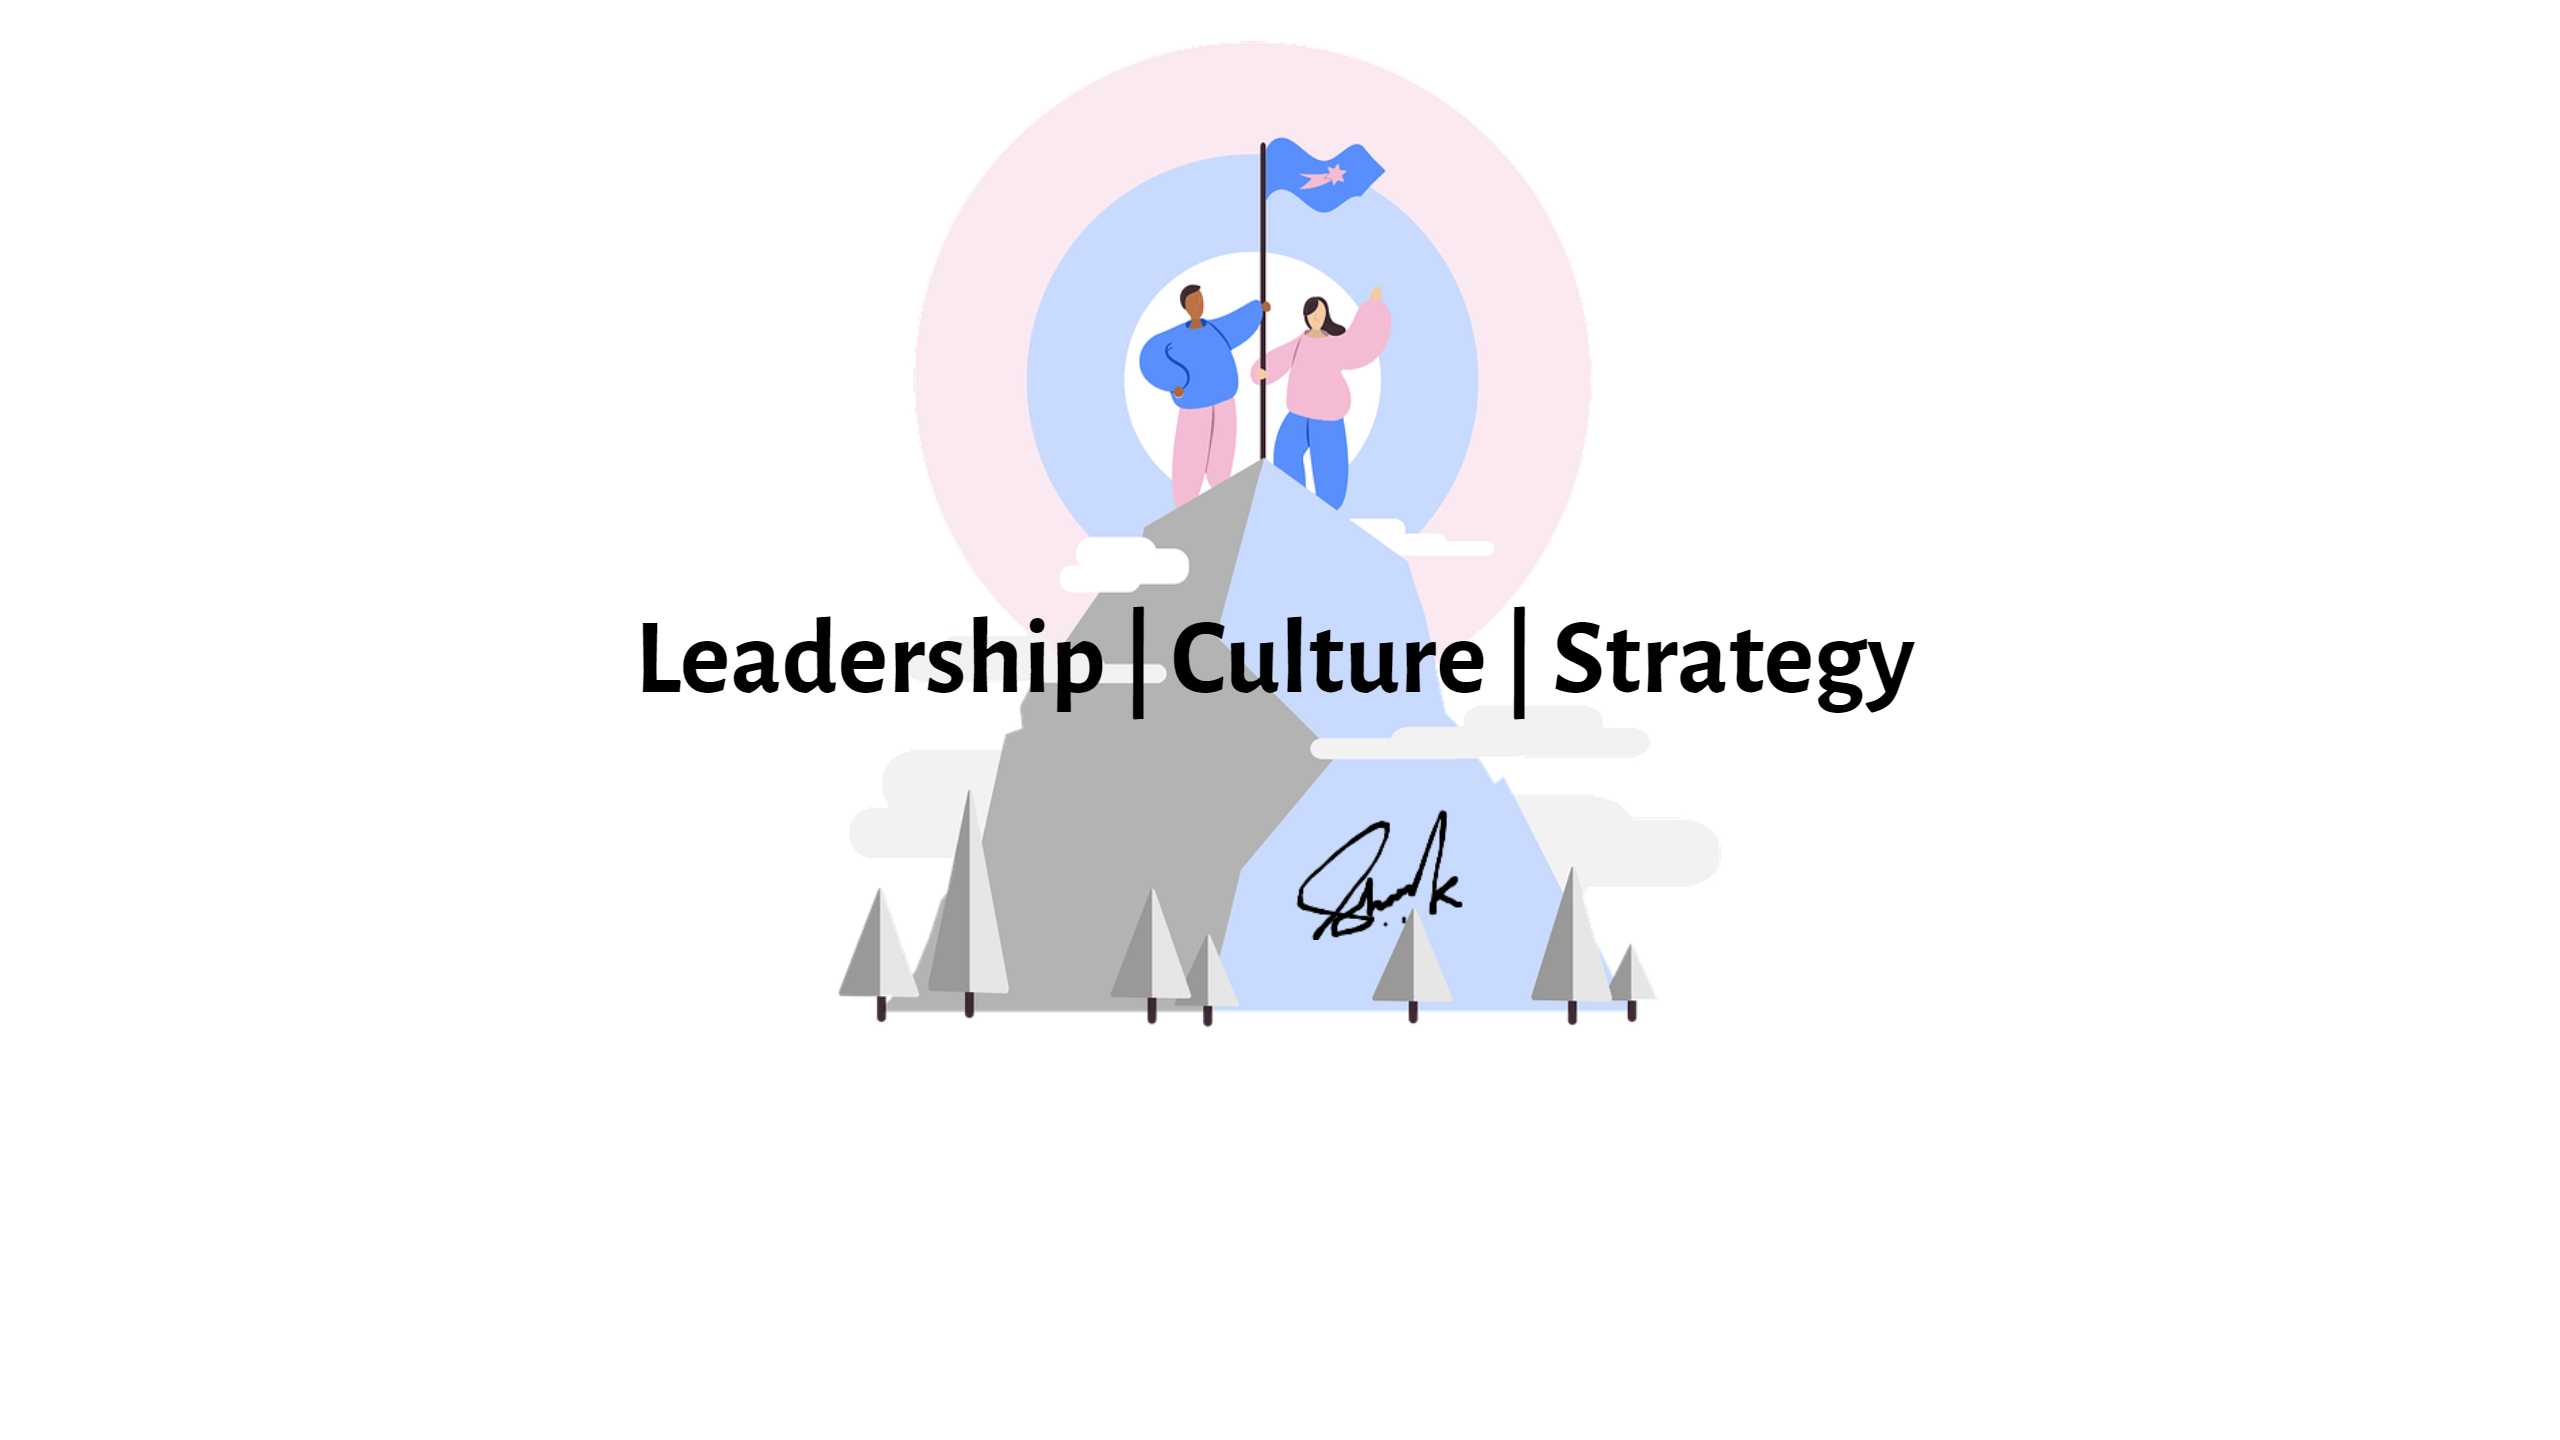 “

lture | Strategy

a.

  
 

Leadershi